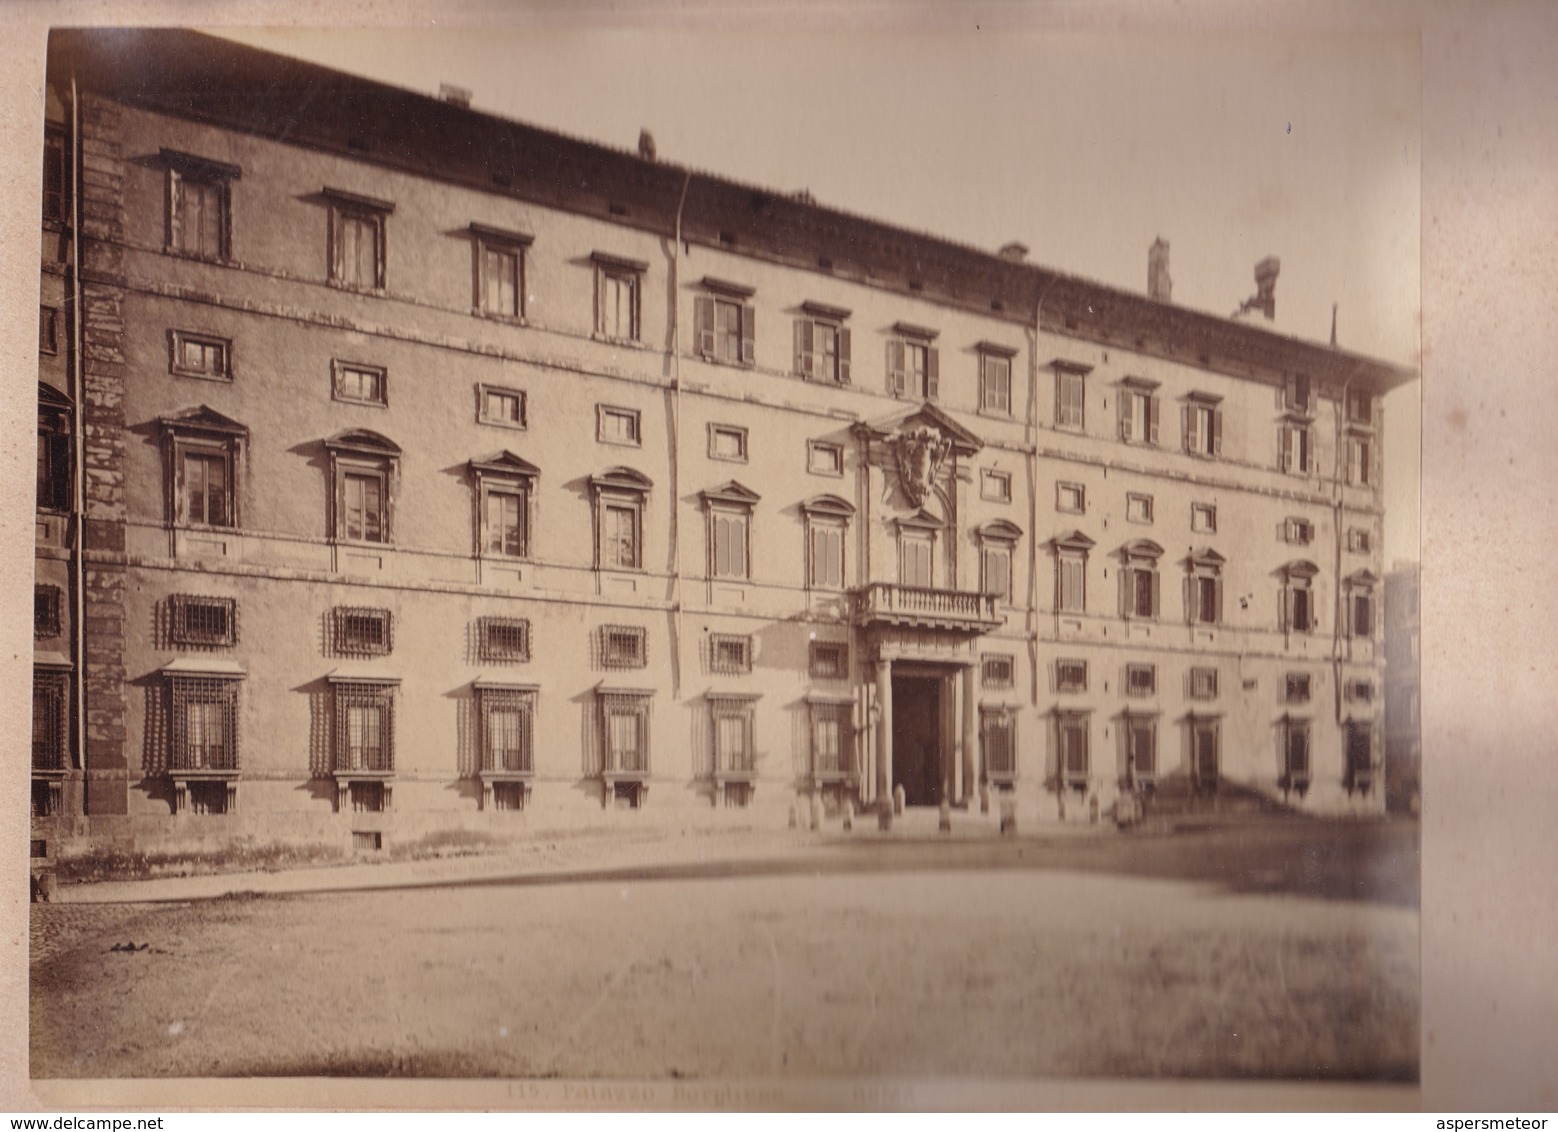 ROMA. PALAZZO BORGHESE. VAN LINT ENRICO PHOTOGRAPHIE ALBUMINEE CIRCA 1868 ALBUMINA SIZE 33x24cm-BLEUP - Alte (vor 1900)